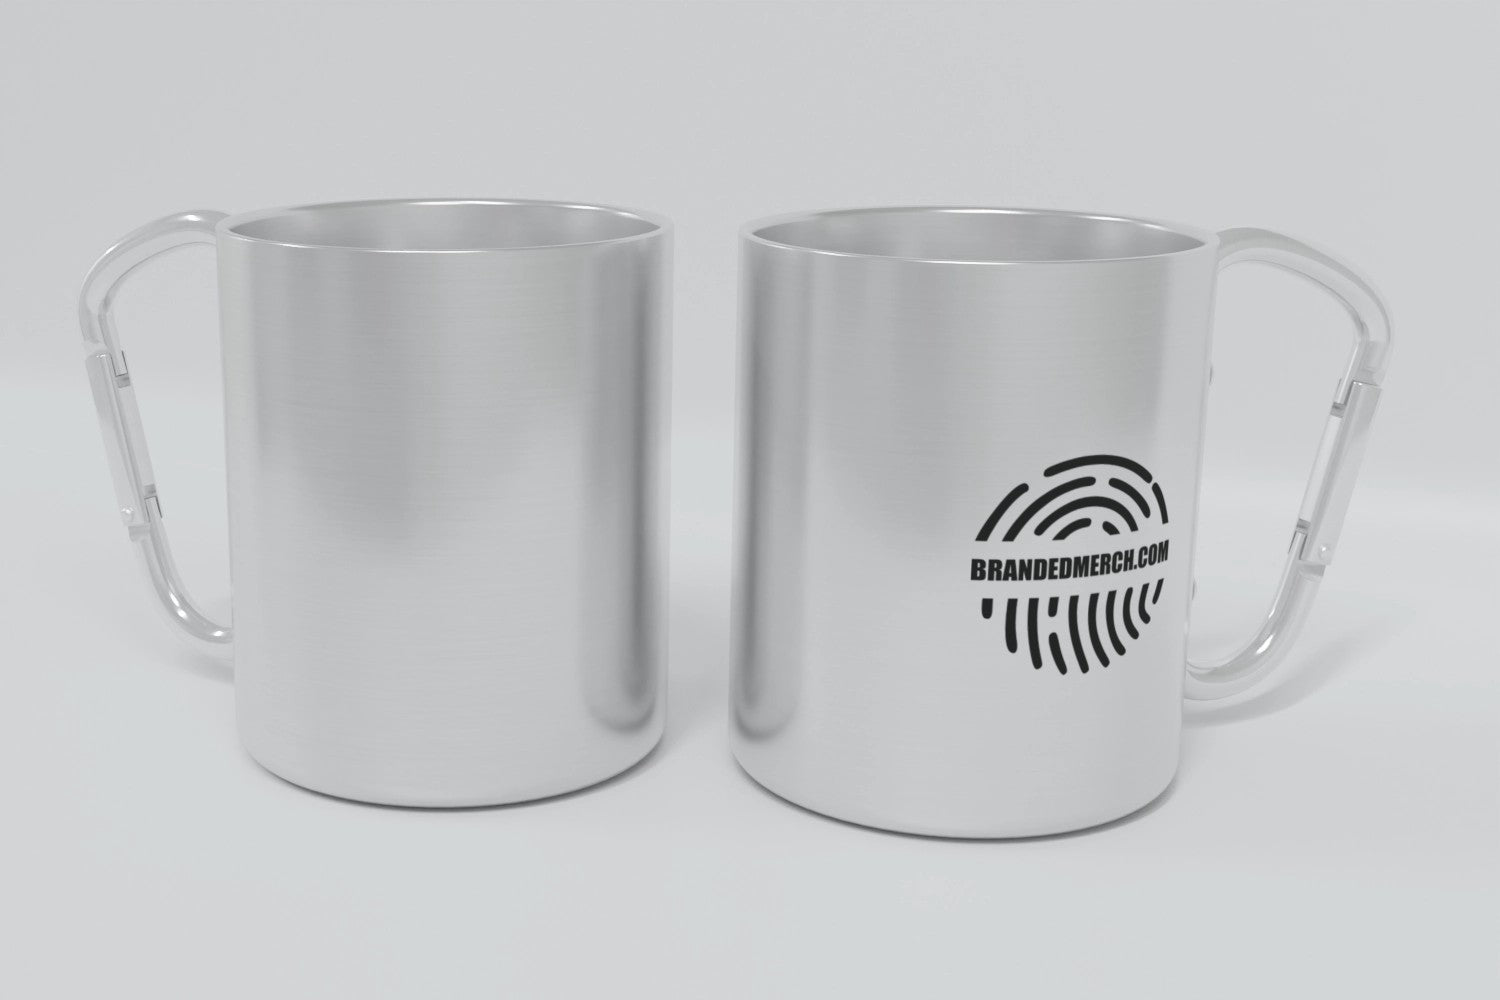 Insulated Mug With Carabiner 200ml